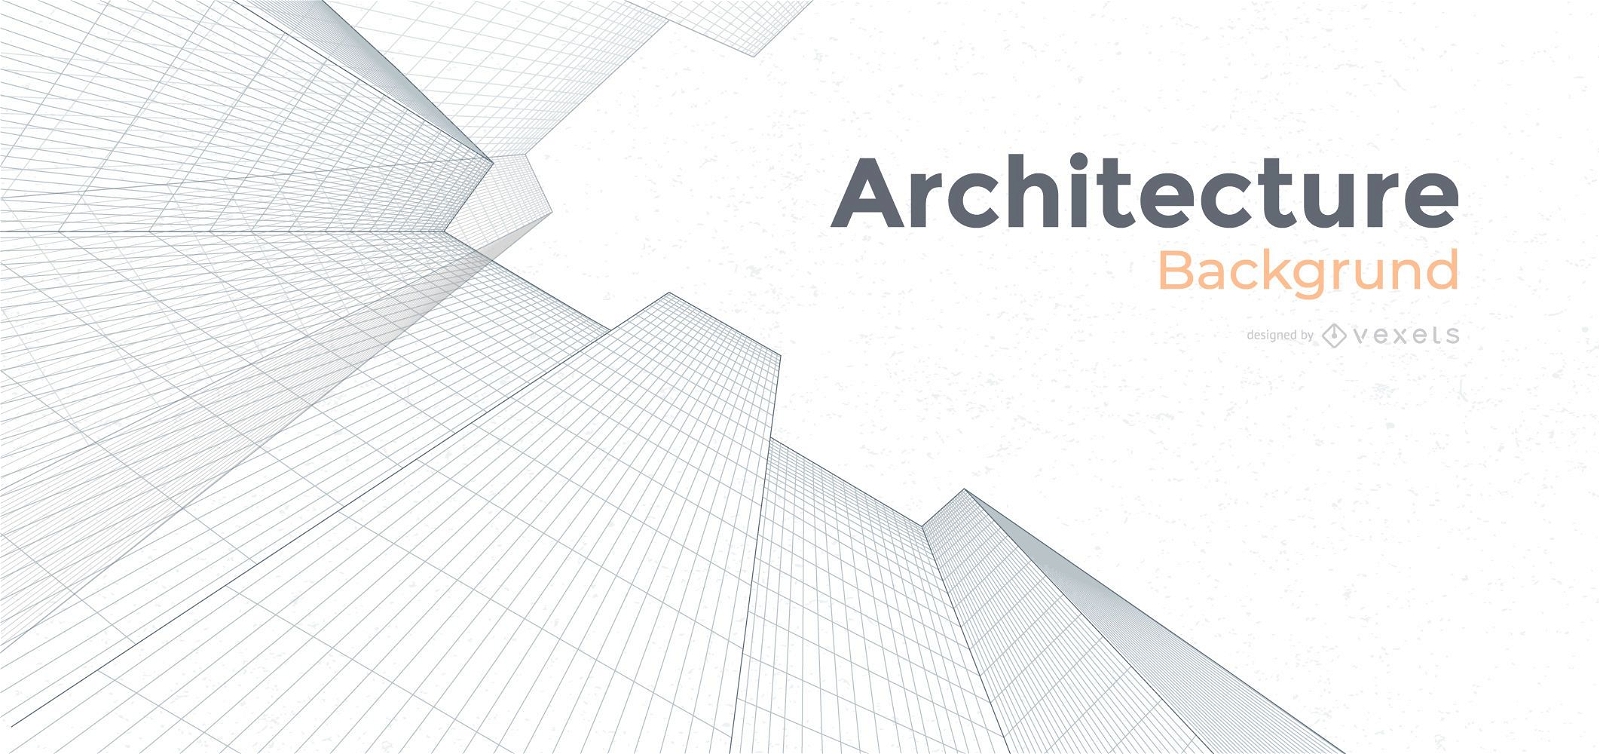 Architecture Buildings Background Design Vector Download